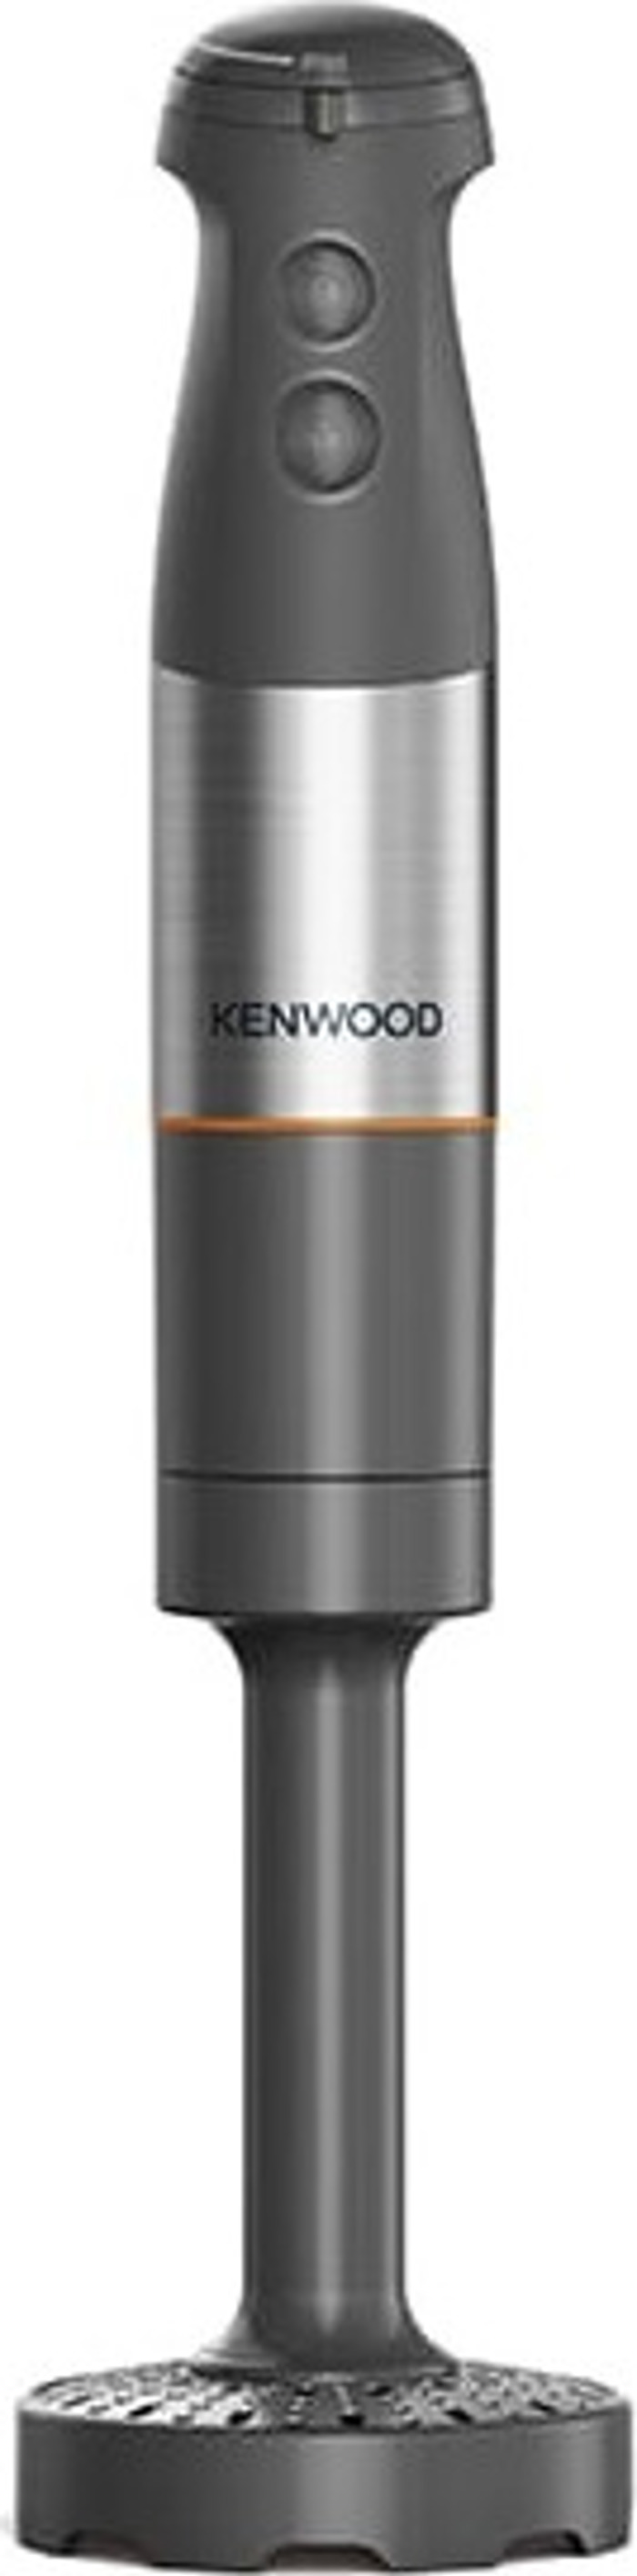 Kenwood HBM60.307GY (Rabdomplenter 1000W)